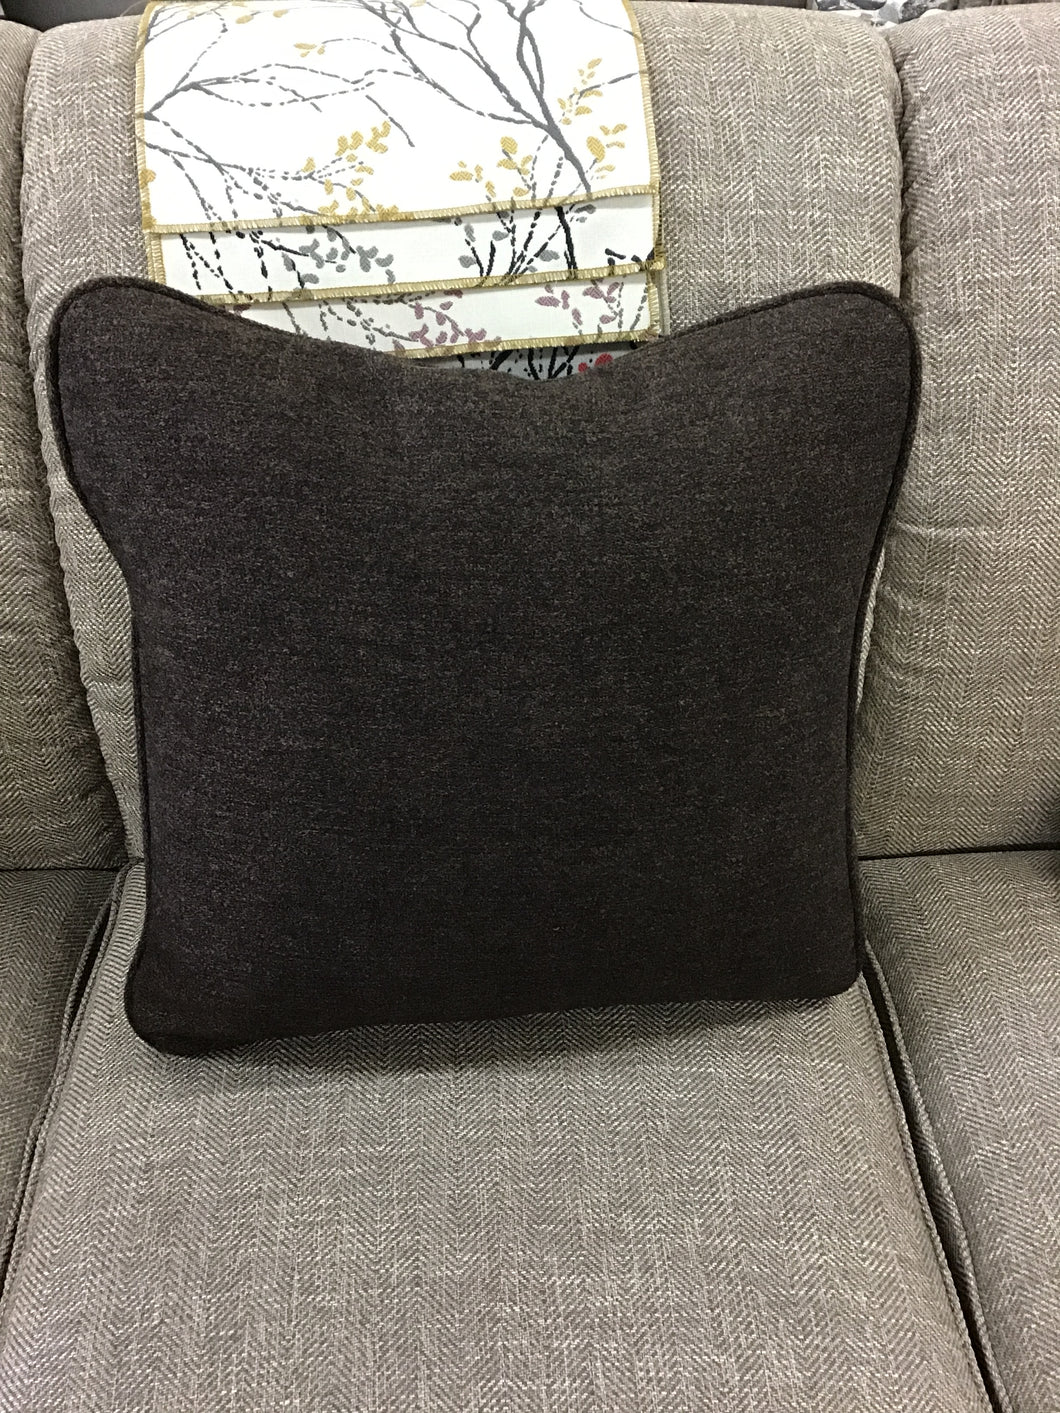 Black Throw Pillow at Coen's Furniture 54124939